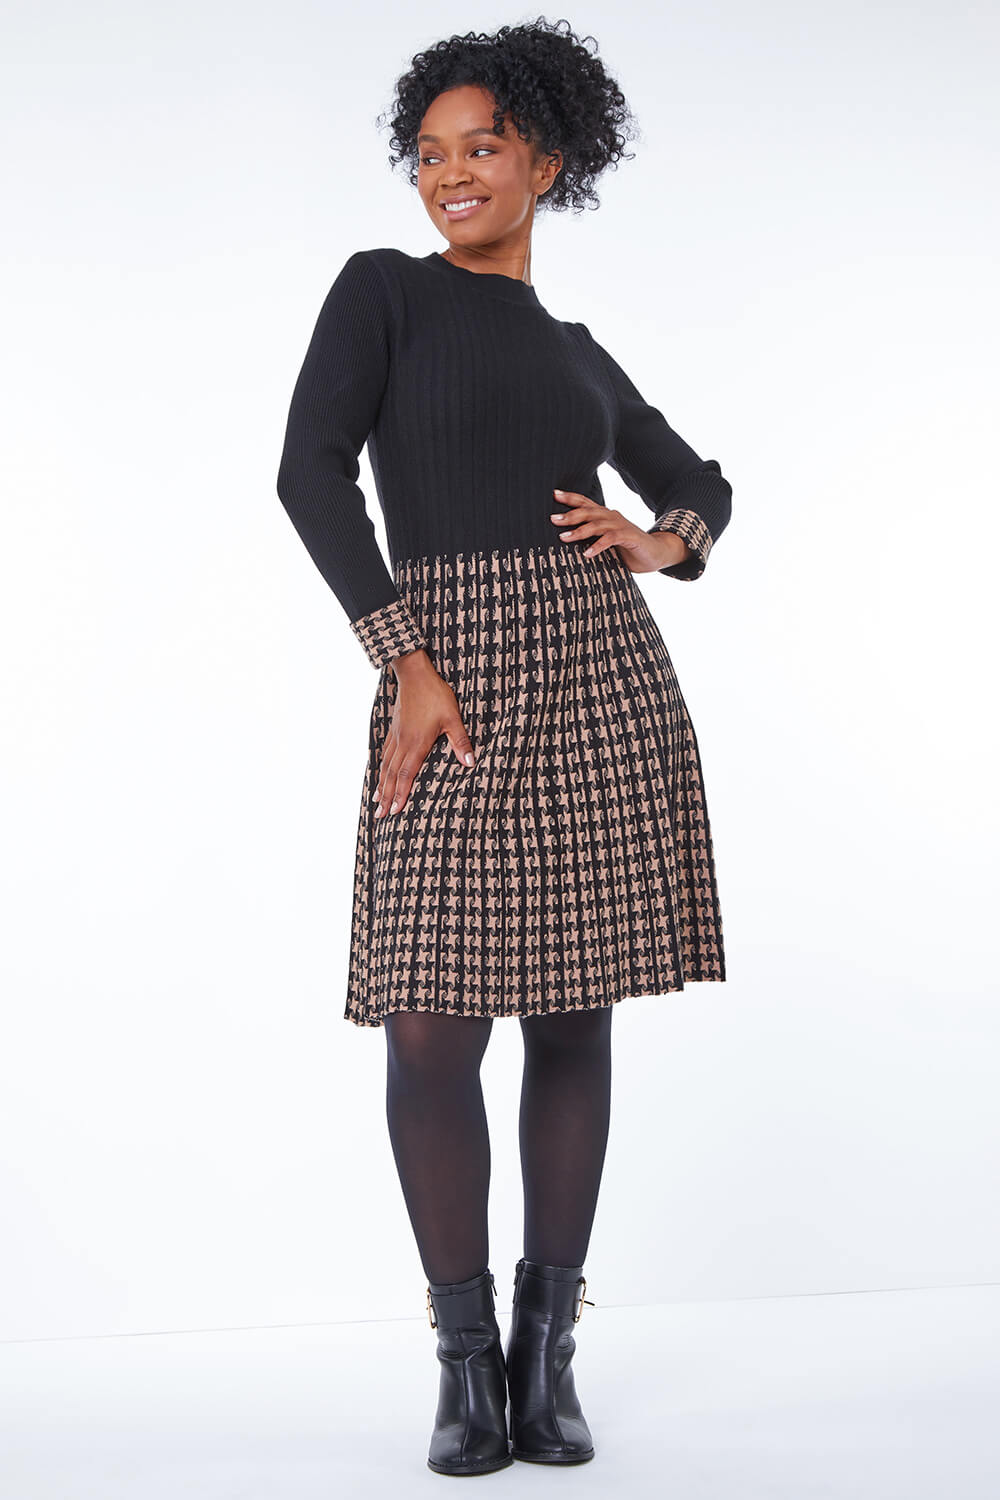 Black Petite Contrast Knitted Jumper Dress, Image 2 of 5